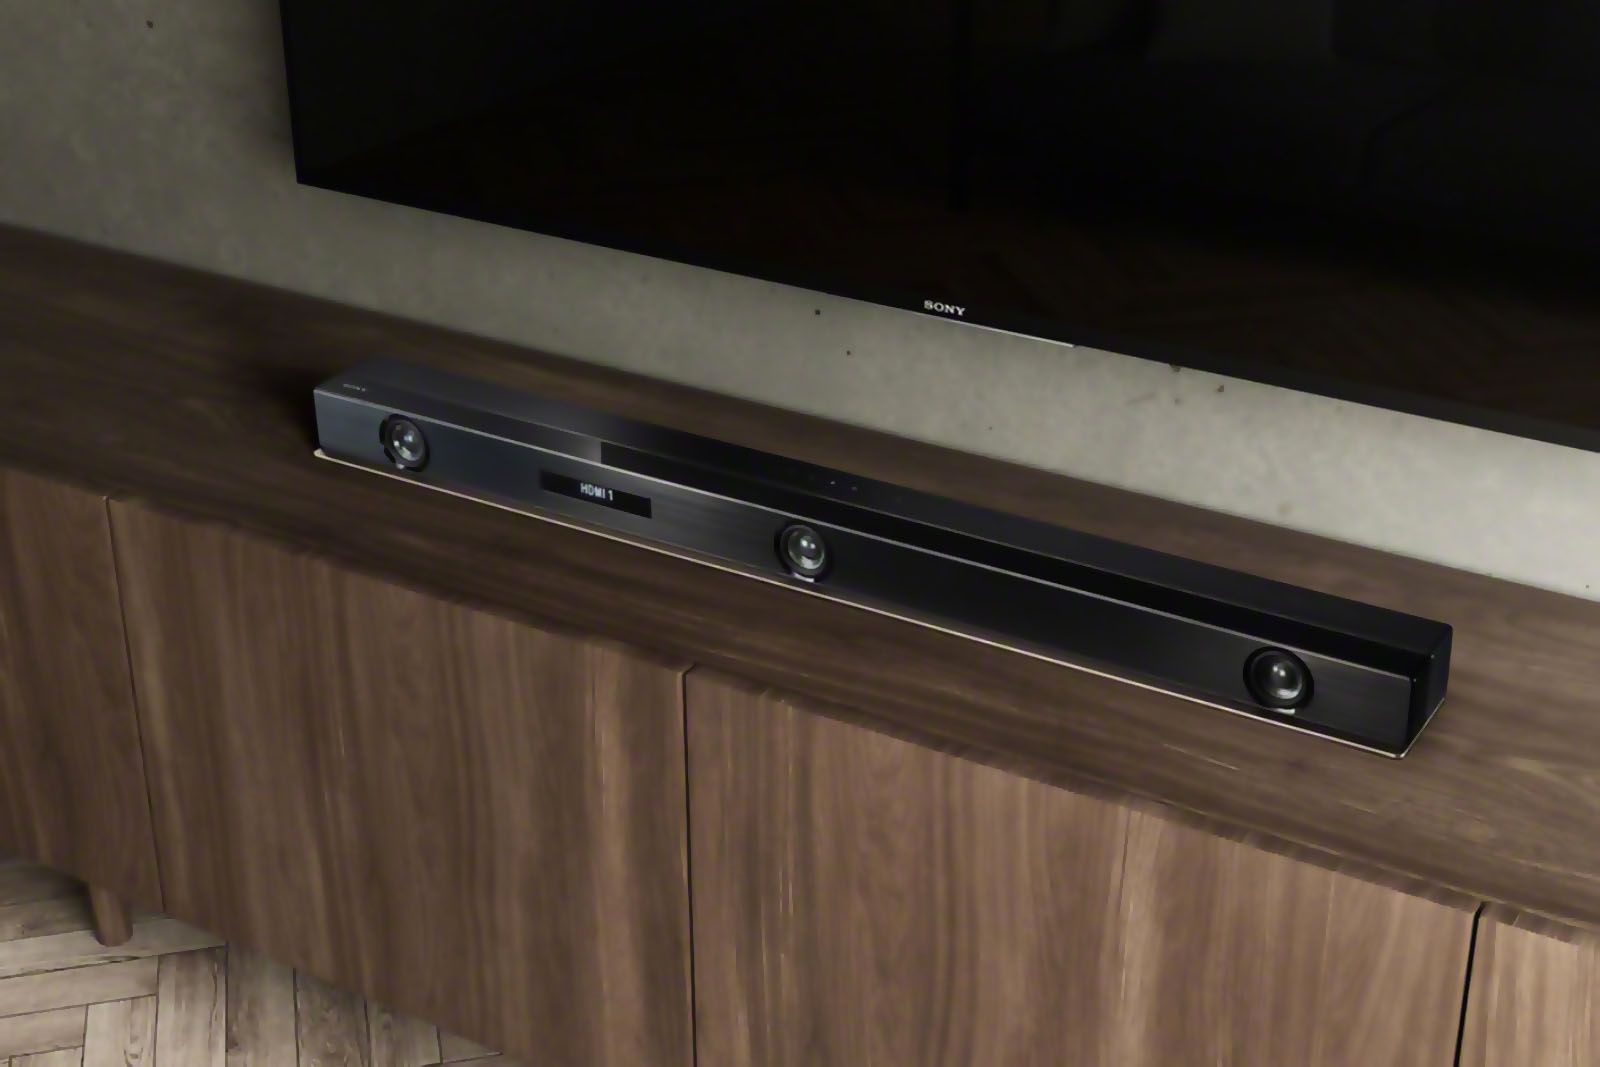 Sonys pricey new soundbars virtualise Dolby Atmos surround sound image 1